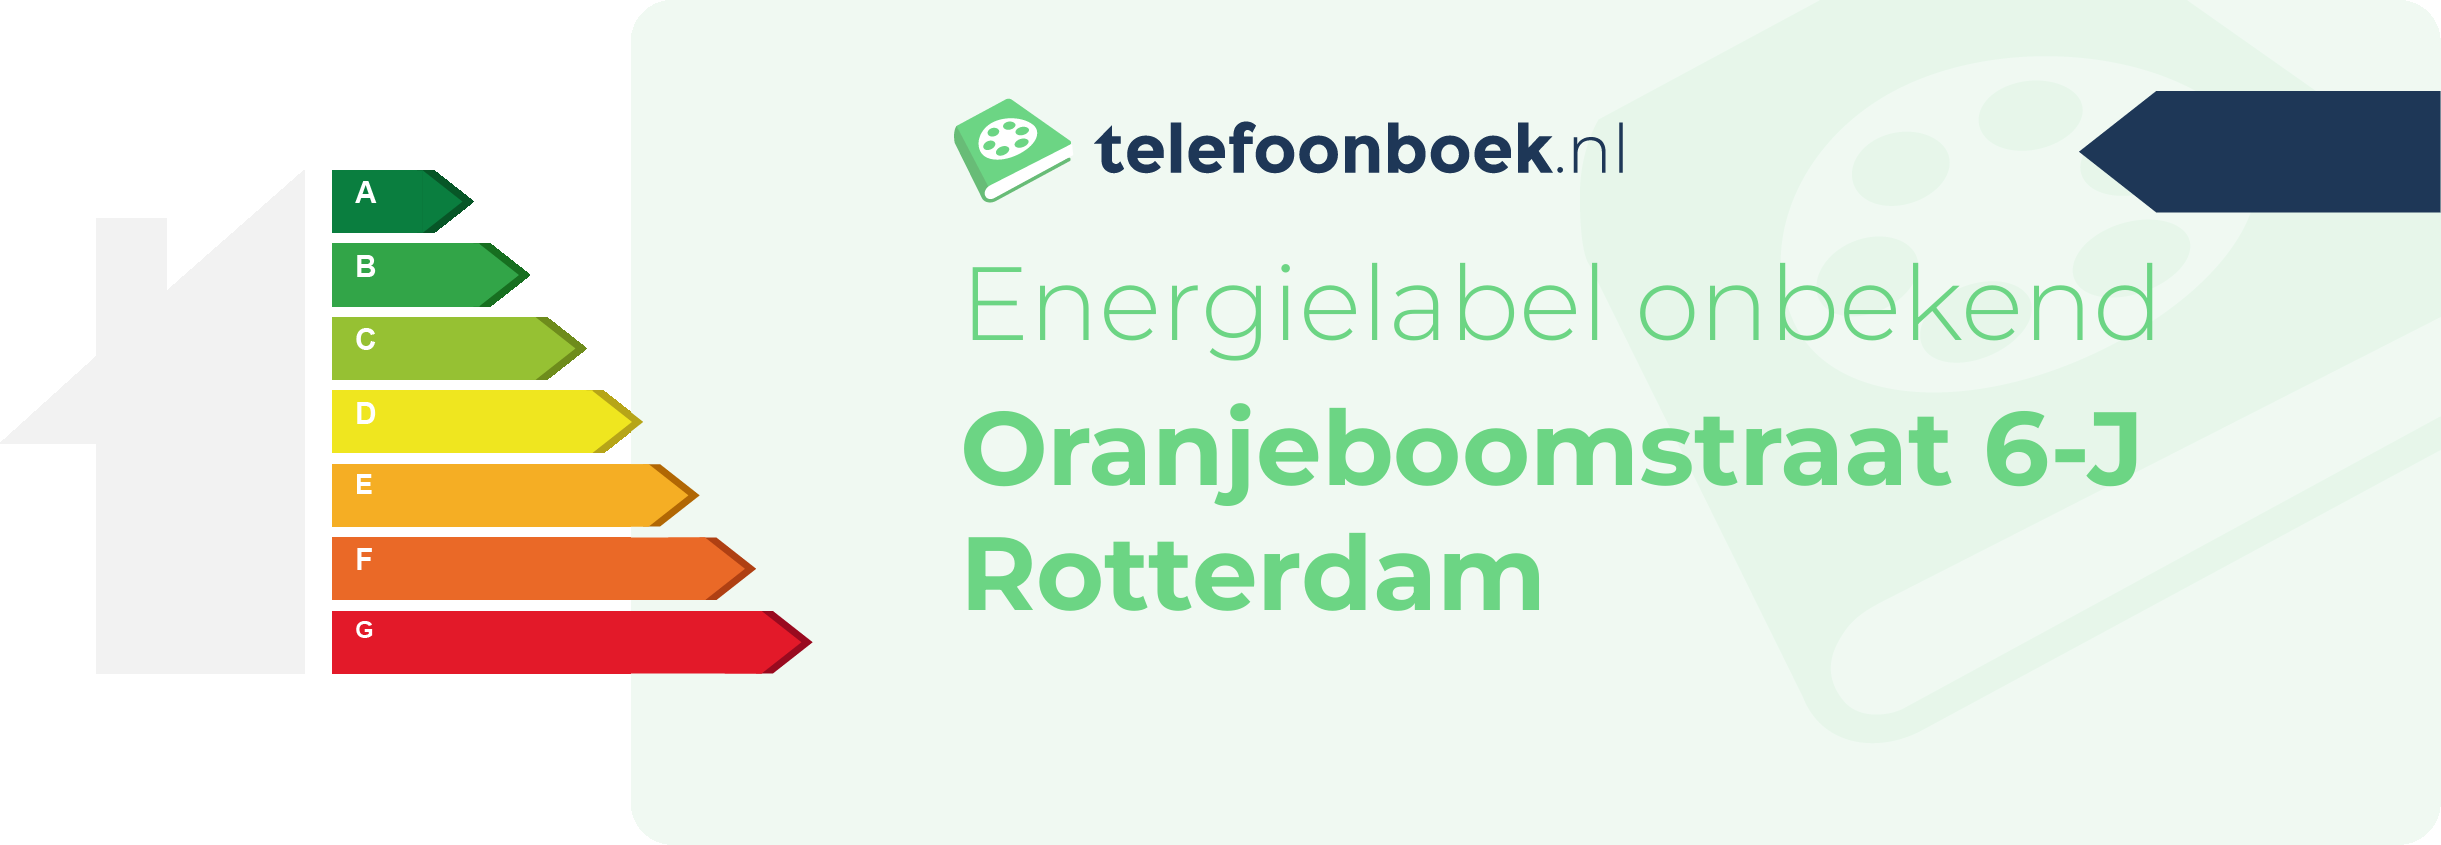 Energielabel Oranjeboomstraat 6-J Rotterdam